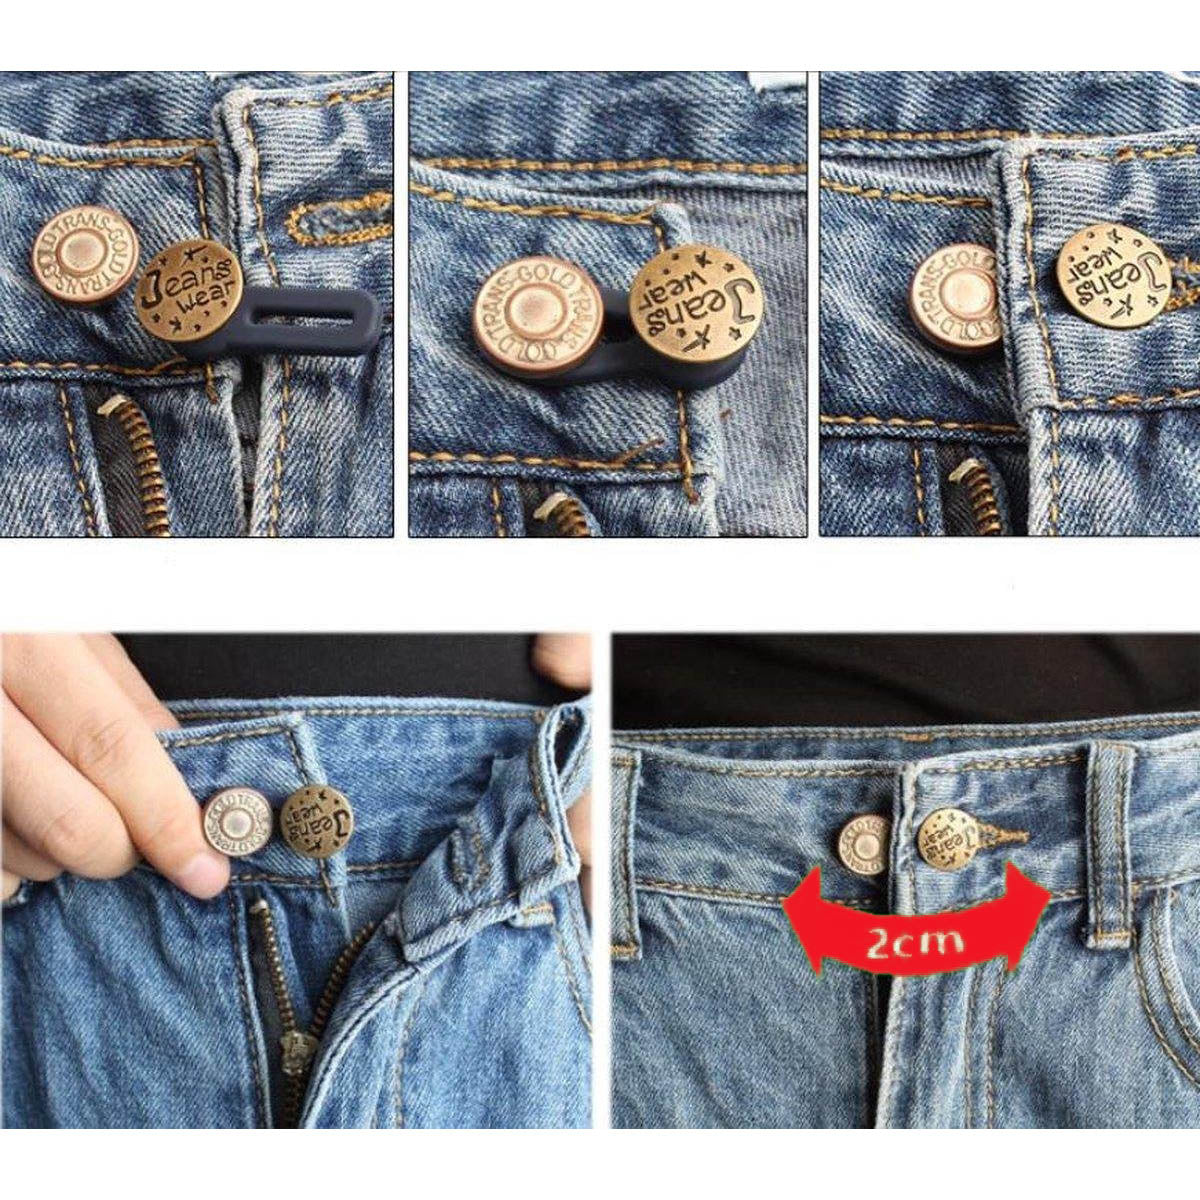 3 pieces jeans extension button - 2 cm - button extender - adjustment button - jeans too tight - Wonder Buttons - Pregnancy Pants Widener - Buttonhole extenders